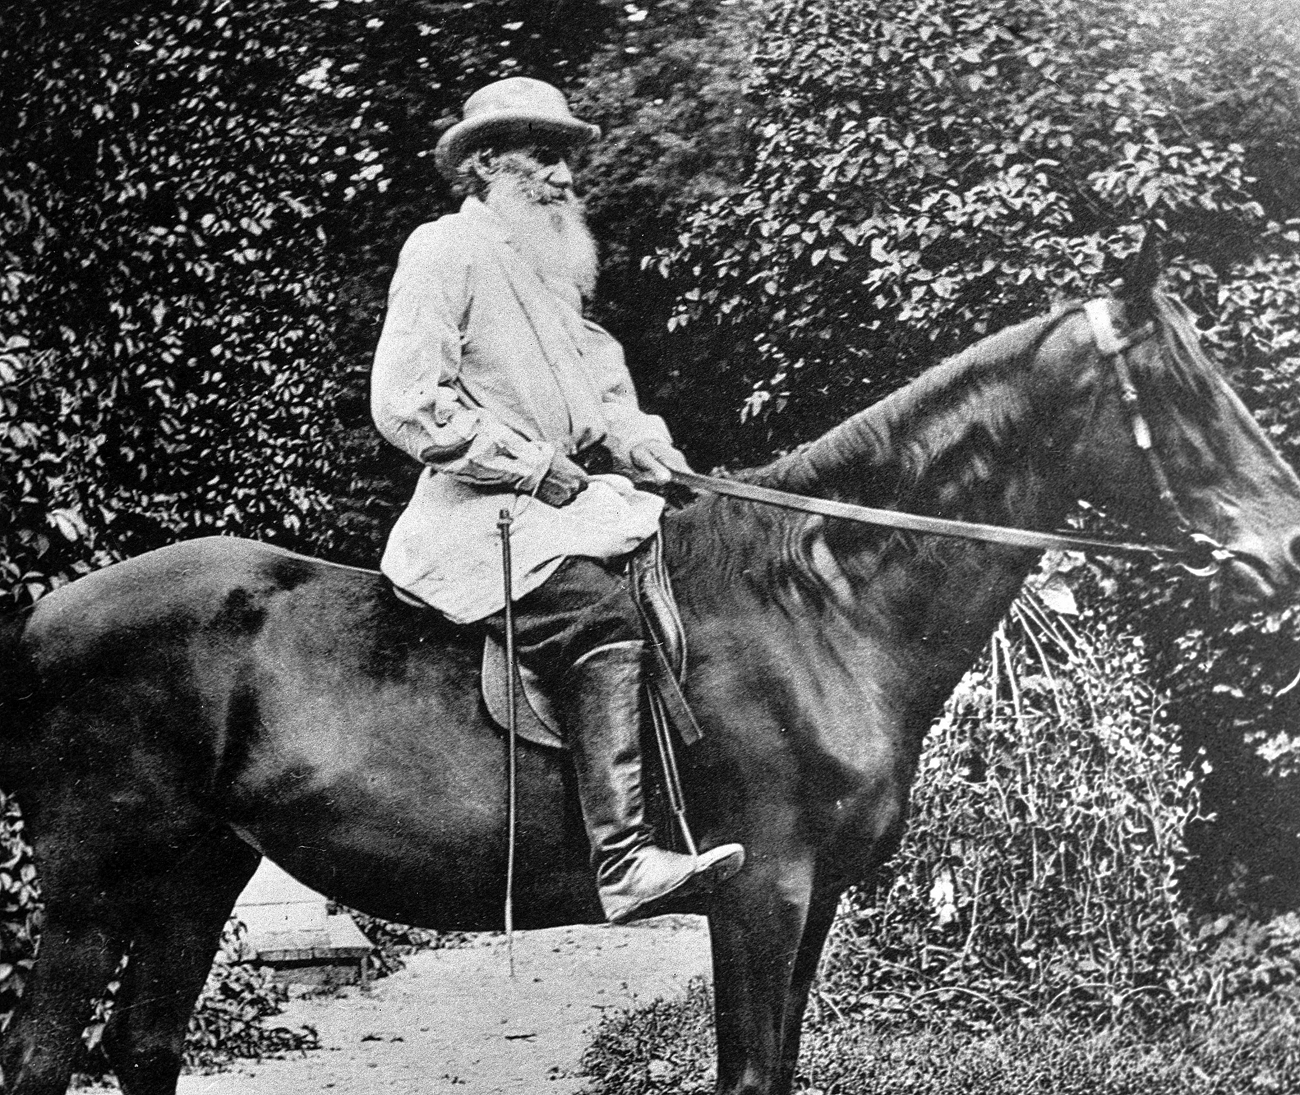 Leo Tolstoy riding a horse in Yasnaya Polyana